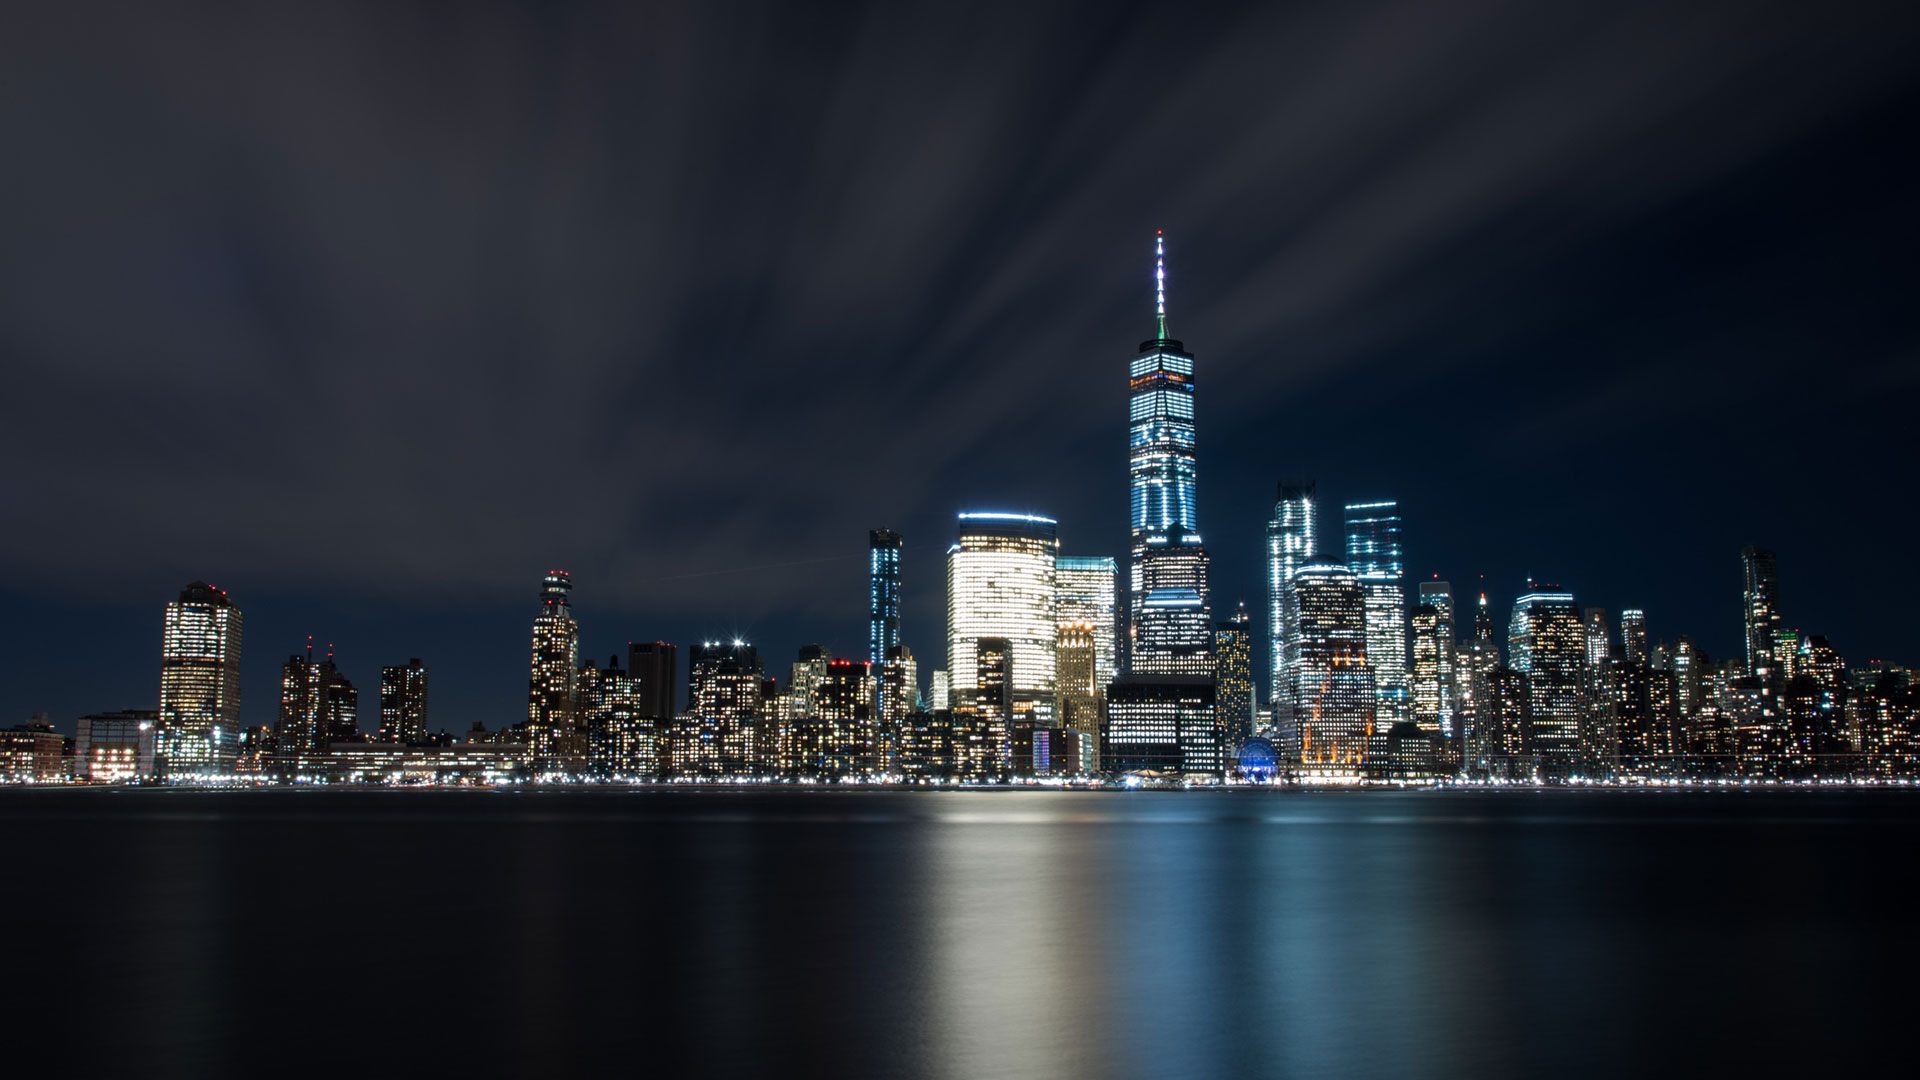 NYC Skyline at night